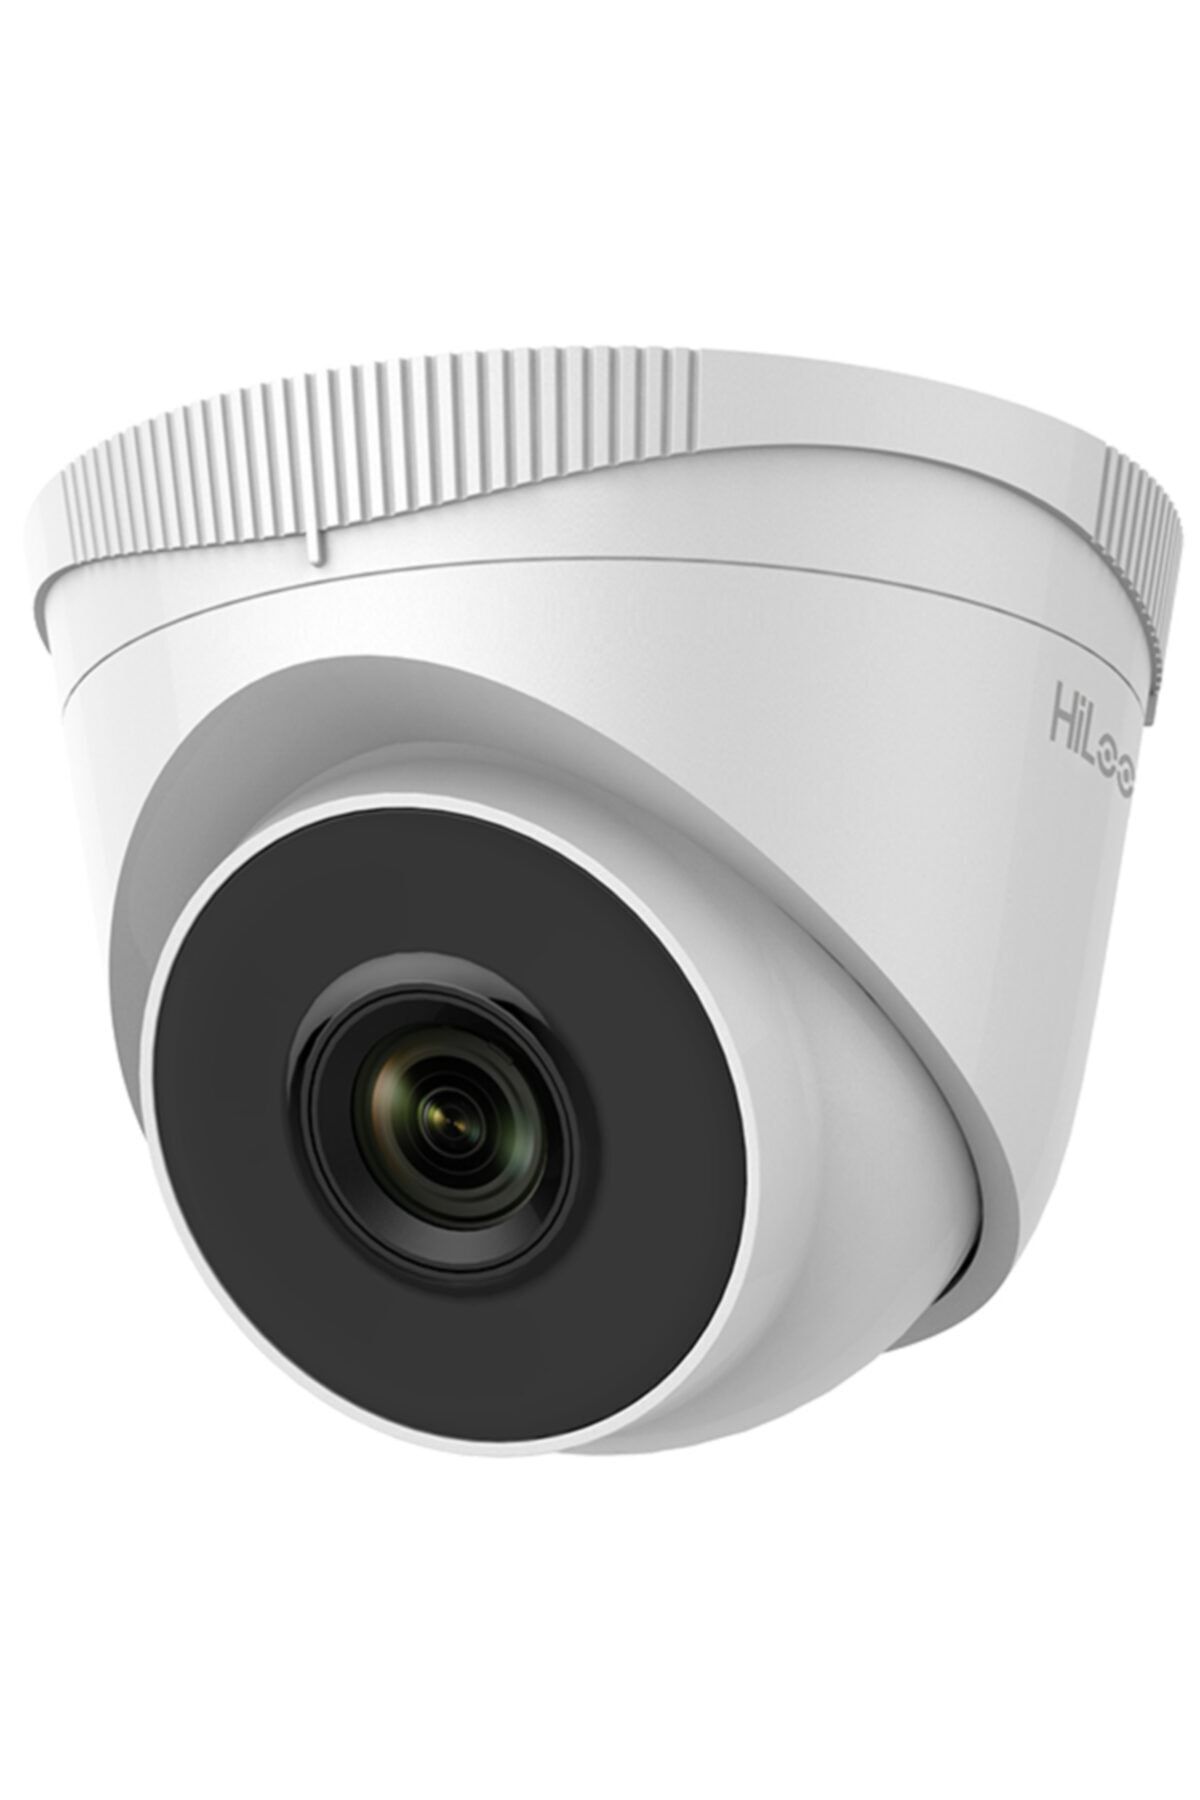 Hilook Hılook Ipc-t221h 2 Mp 1080p 1/2.8 2.8/4/6mm Sabit Lens 30 Mt Poe Metal Kasa Ip Dome Kamera